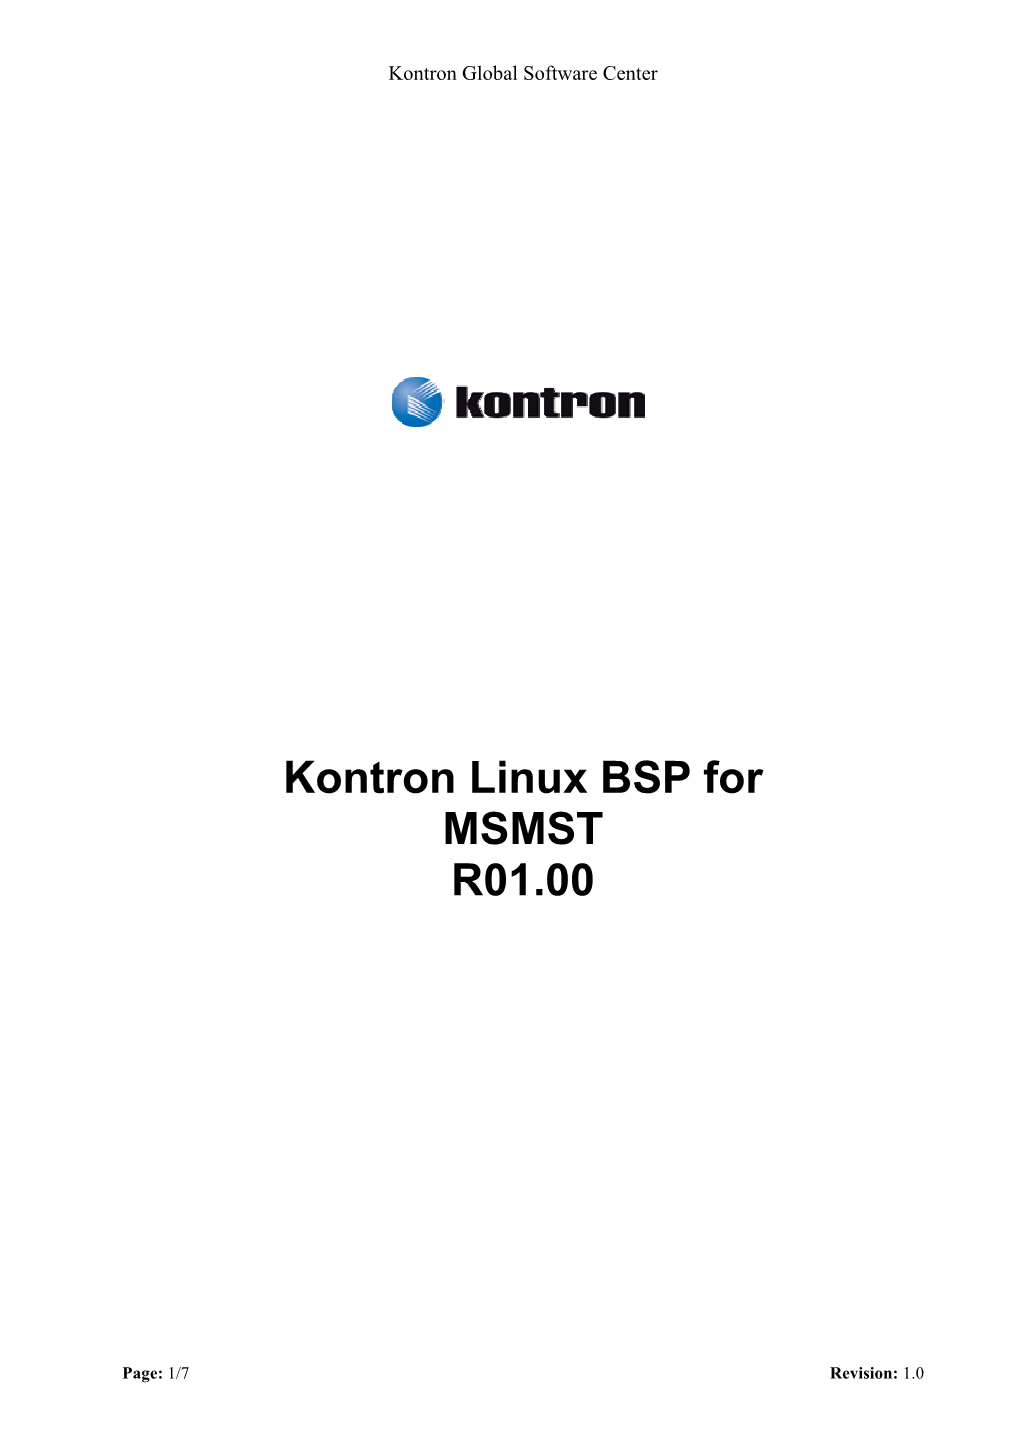 Kontron Linux BSP for MSMST R01.00